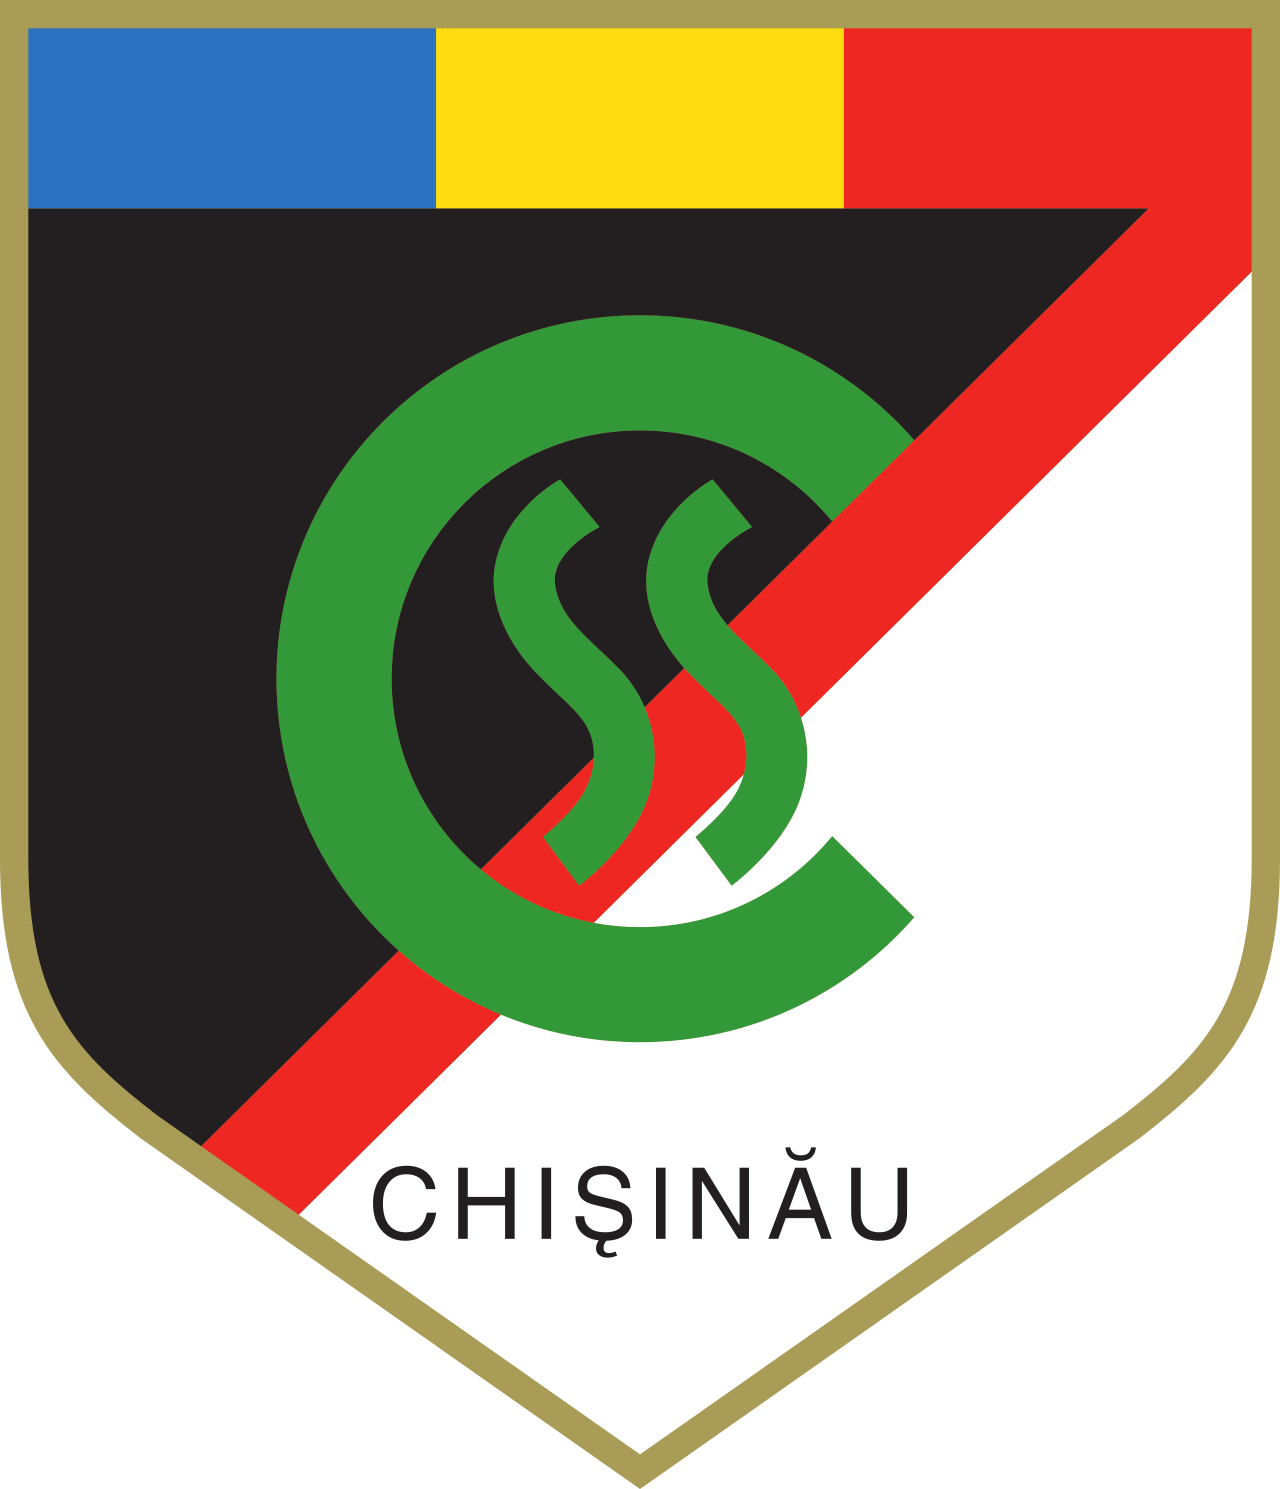 FC Agro-Goliador Chișinău - Wikipedia